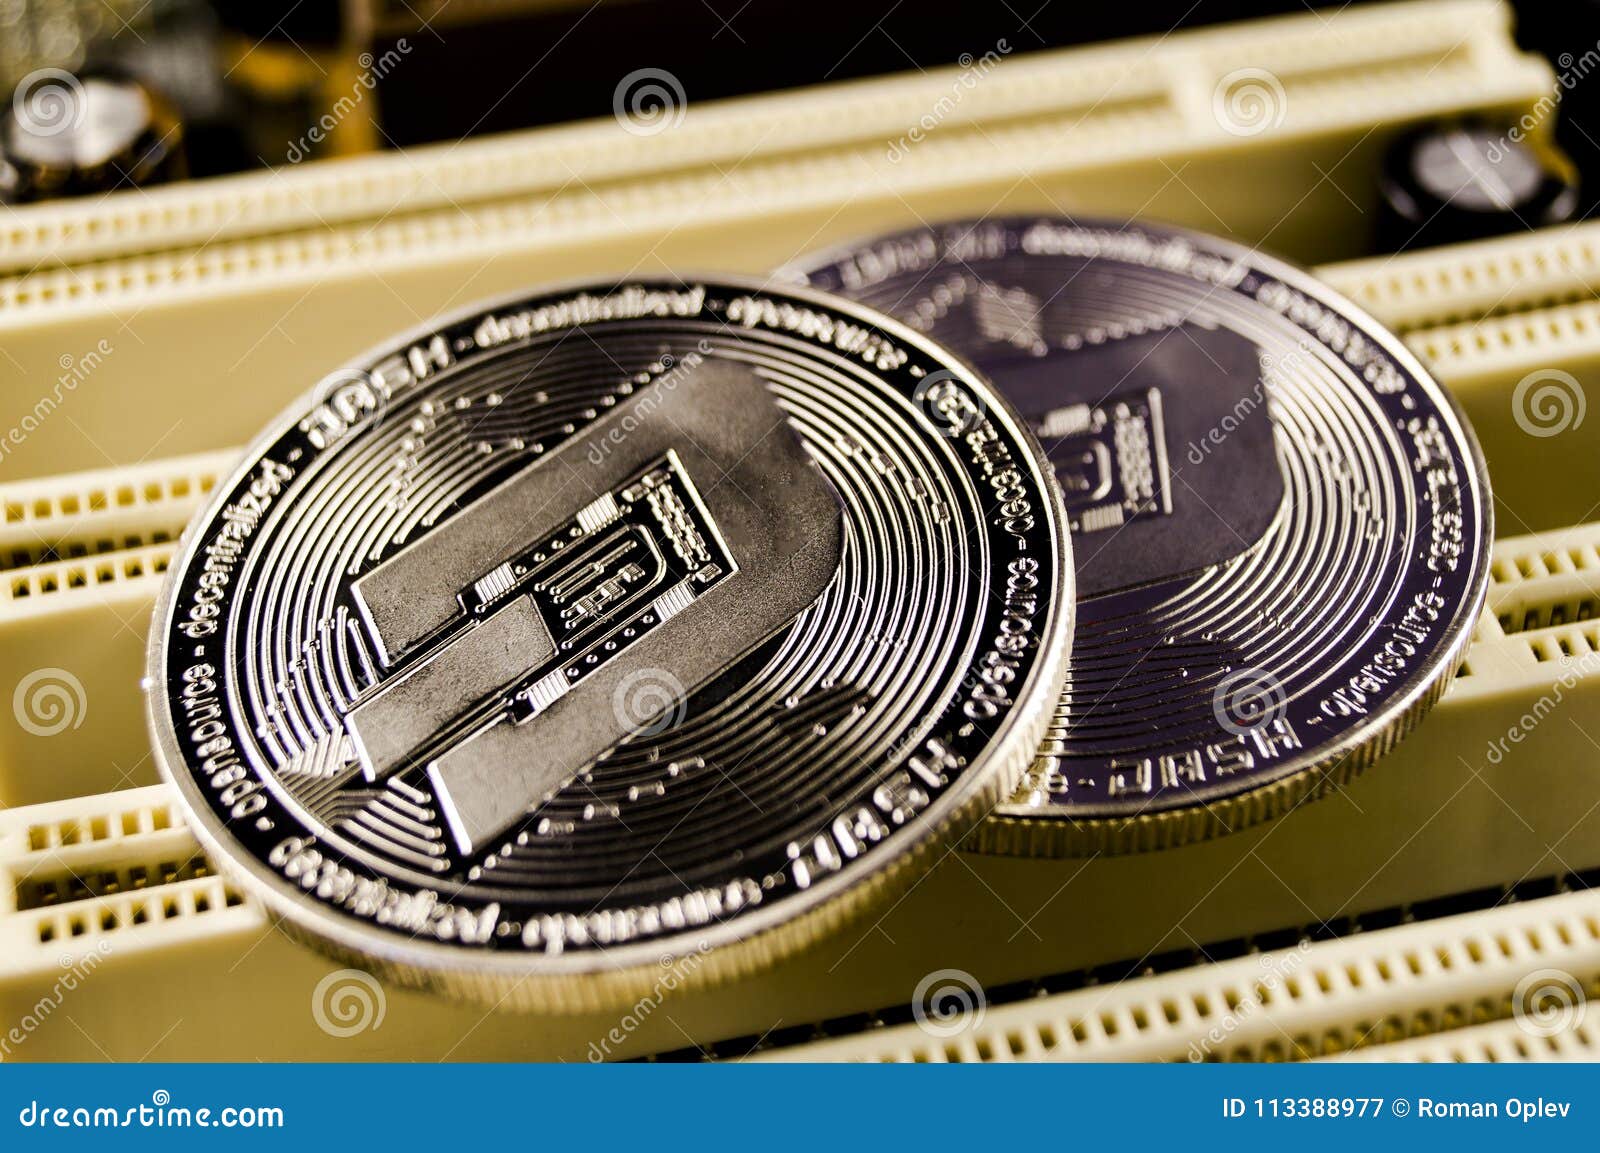 Node crypto currency армения обмен валюты